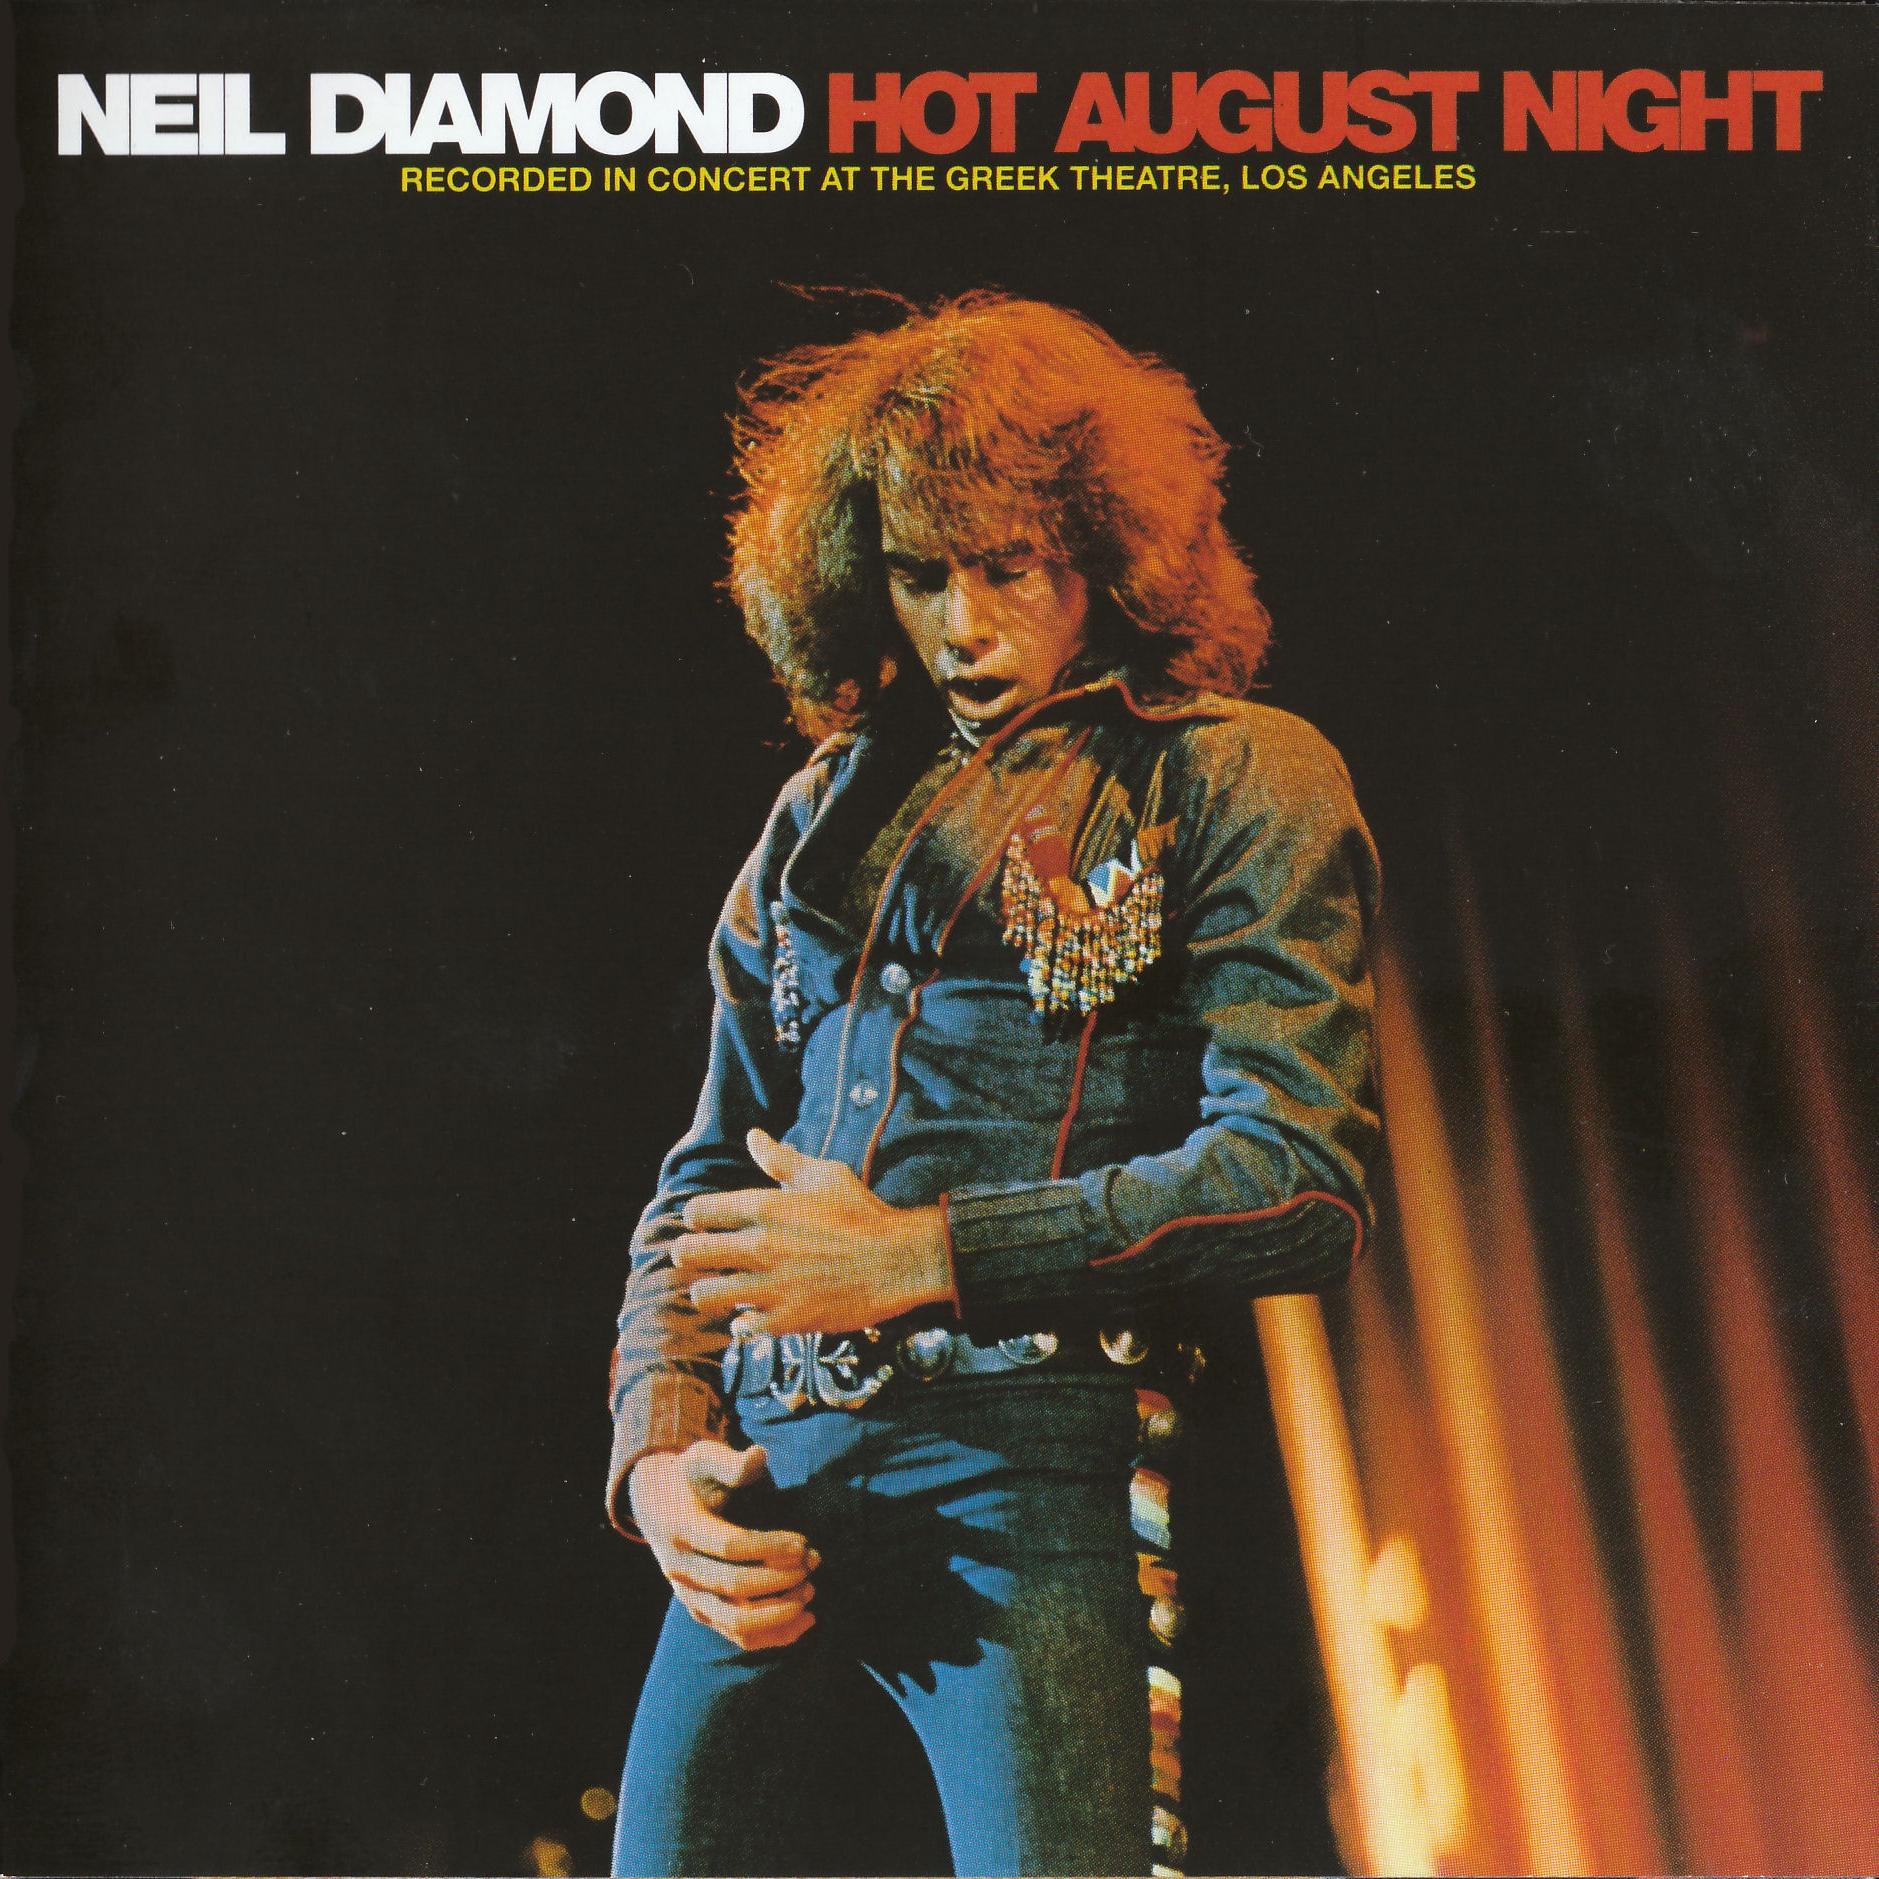 NEIL DIAMOND - HOT AUGUST NIGHT - 2LP VINYL - Wah Wah Records